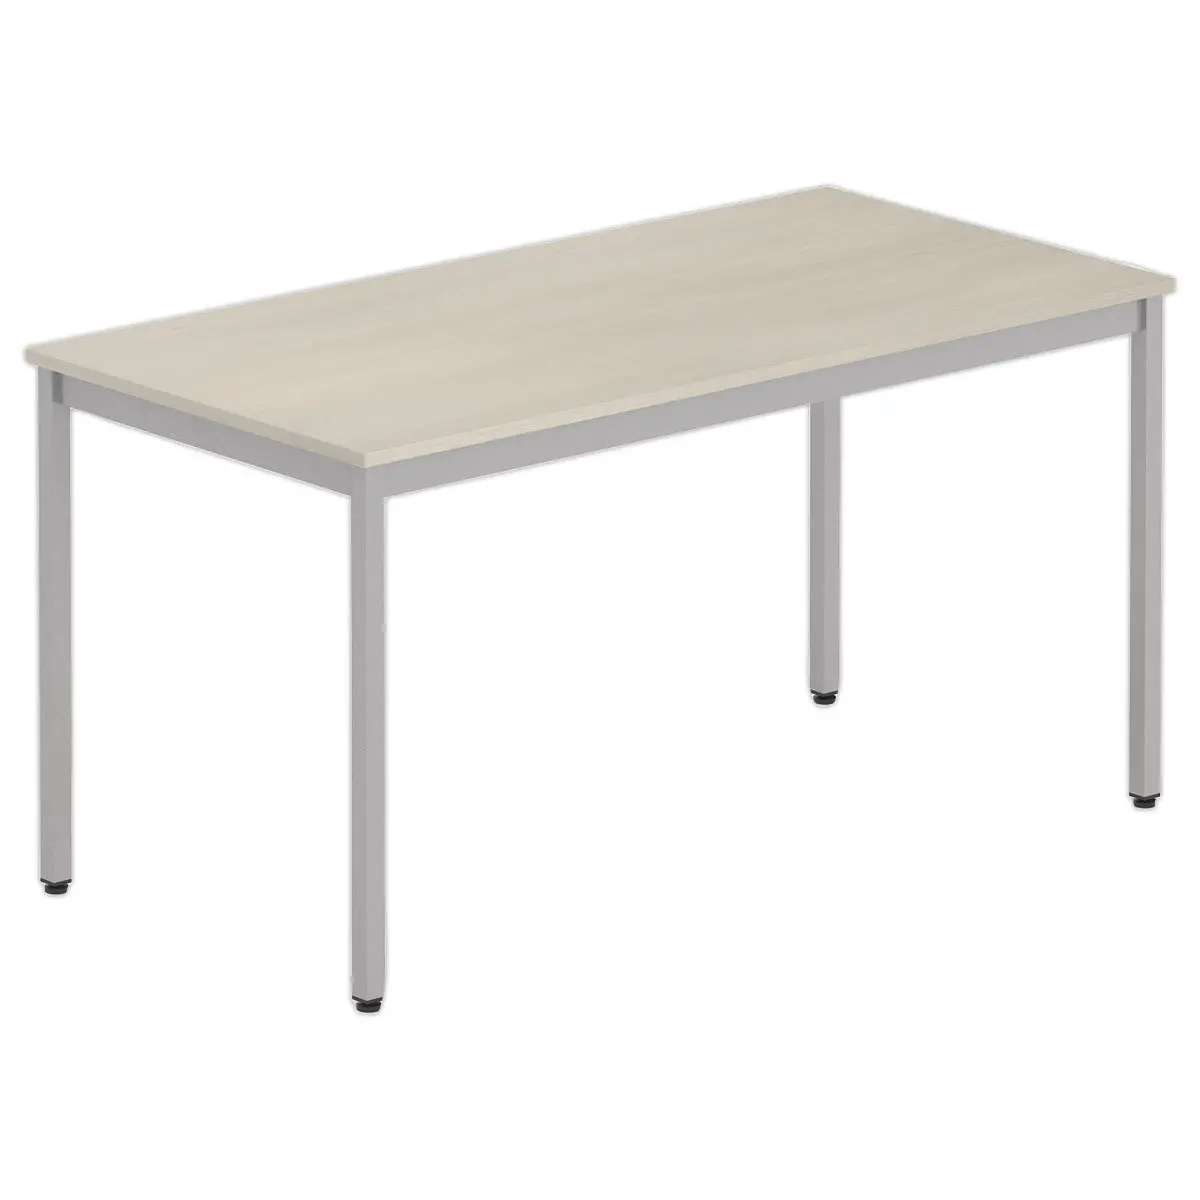 Table modulaire rectangulaire 140 x 70acacia / alu photo du produit